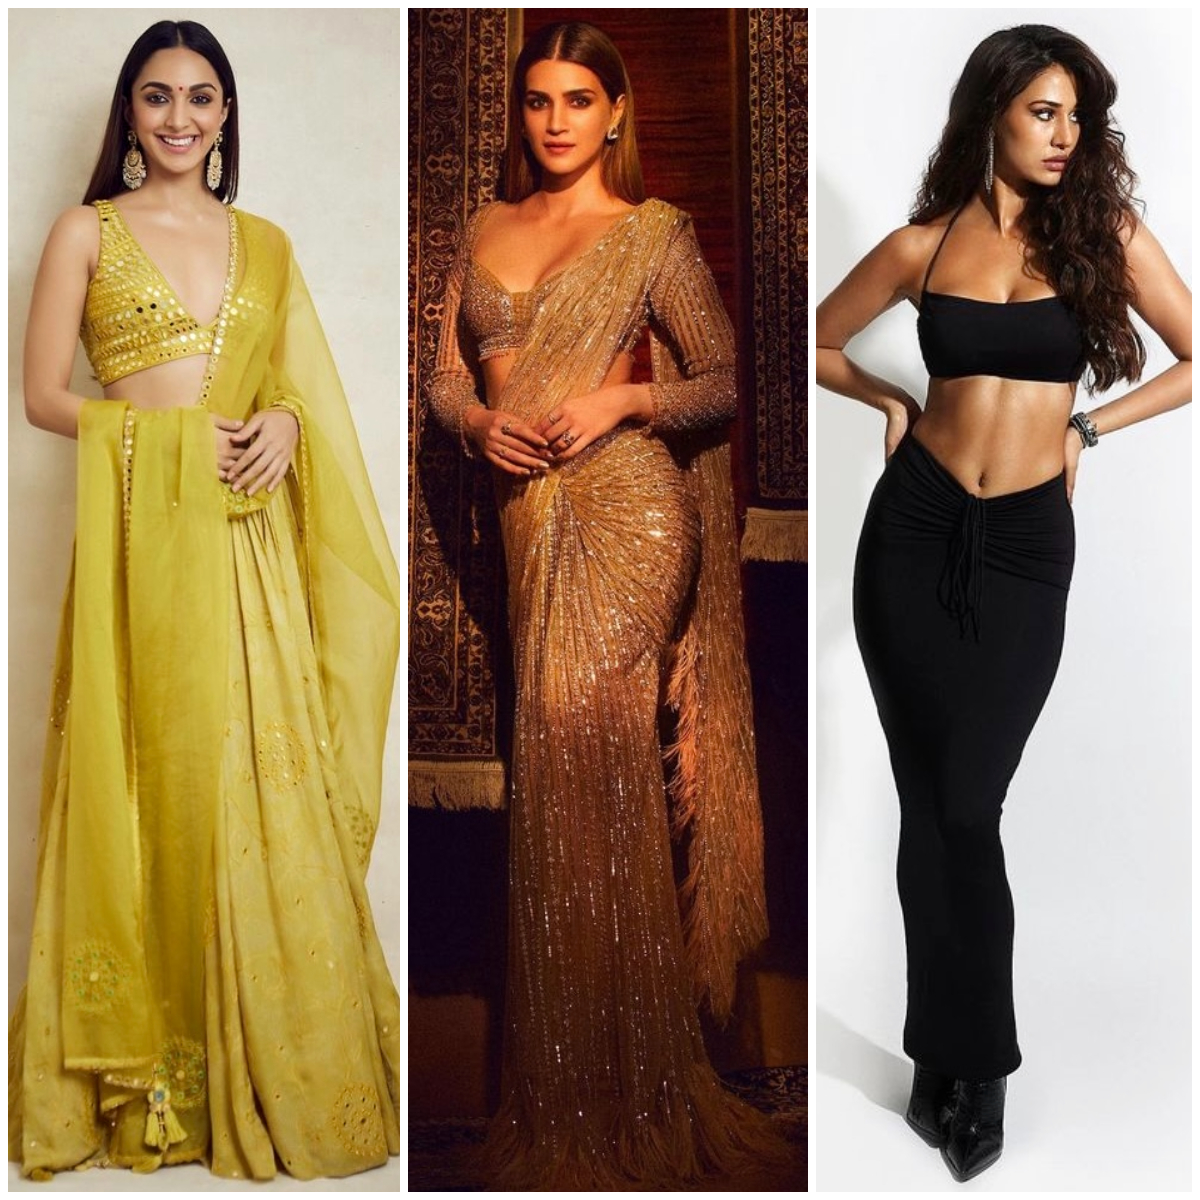 Kiara Advani, Kriti Sanon to Disha Patani: A roundup of the most GLAM celebrity looks from the week